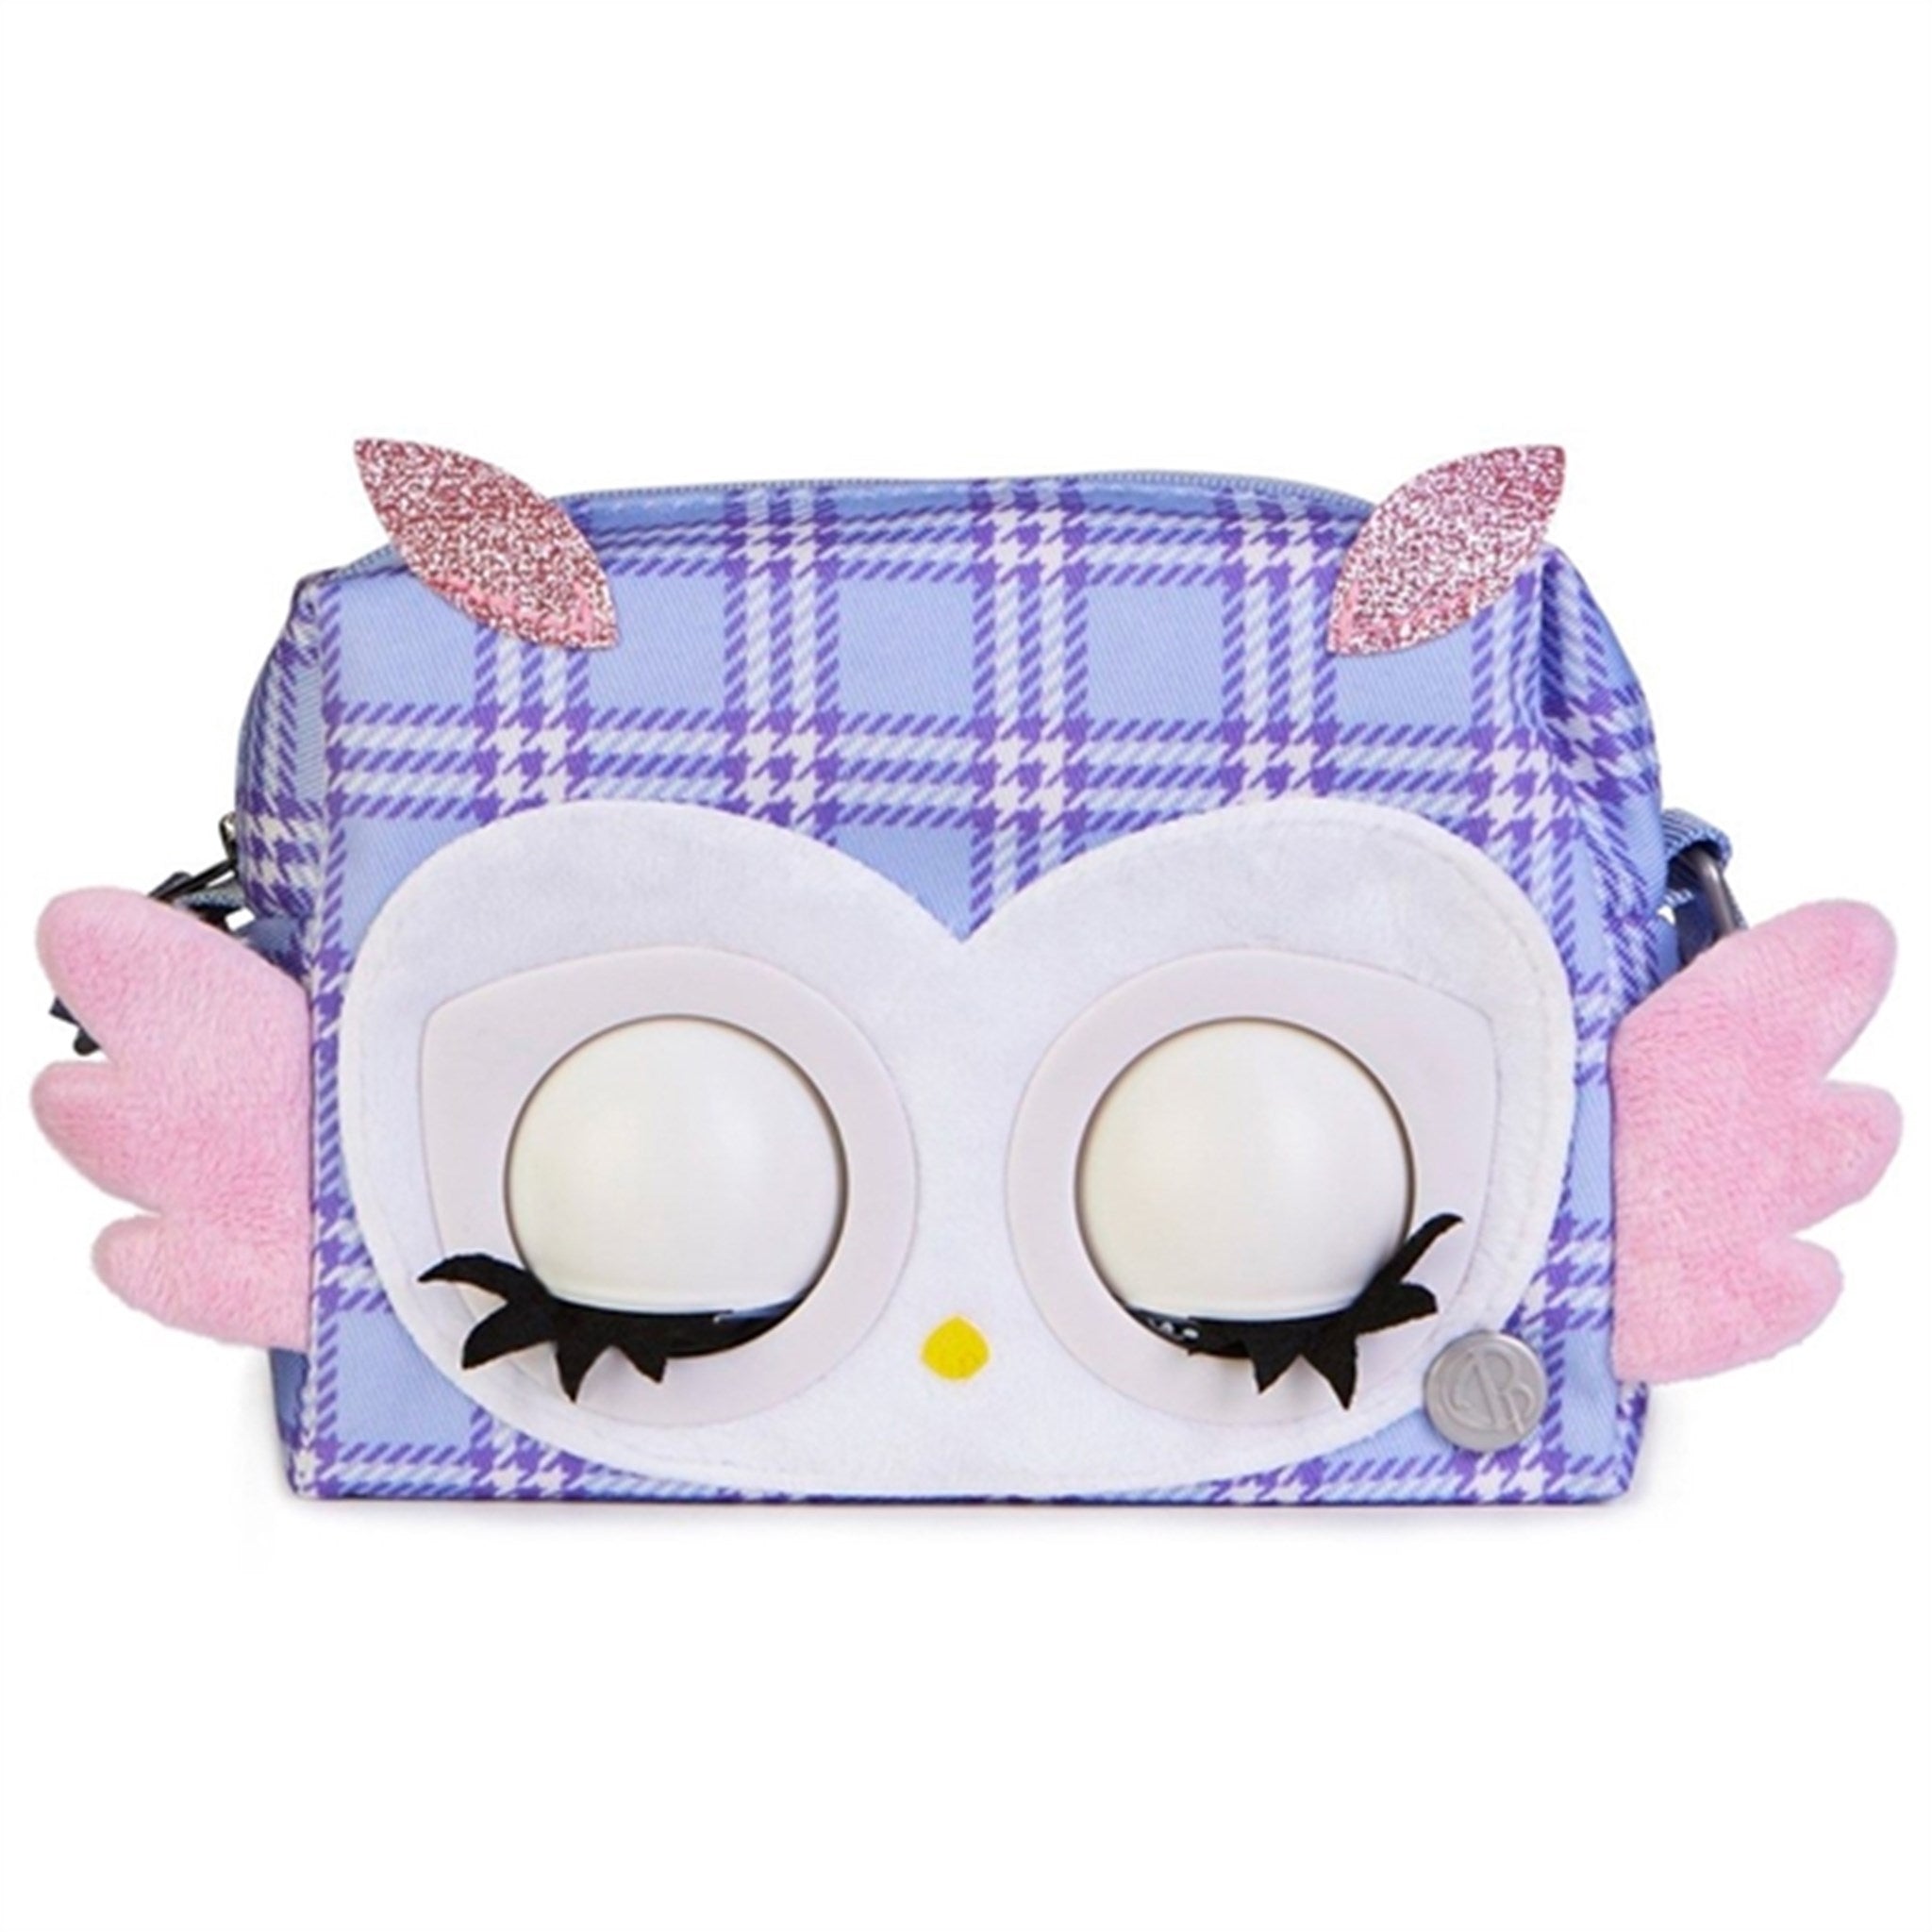 Purse Pets Väska Print Perfect Owl 2